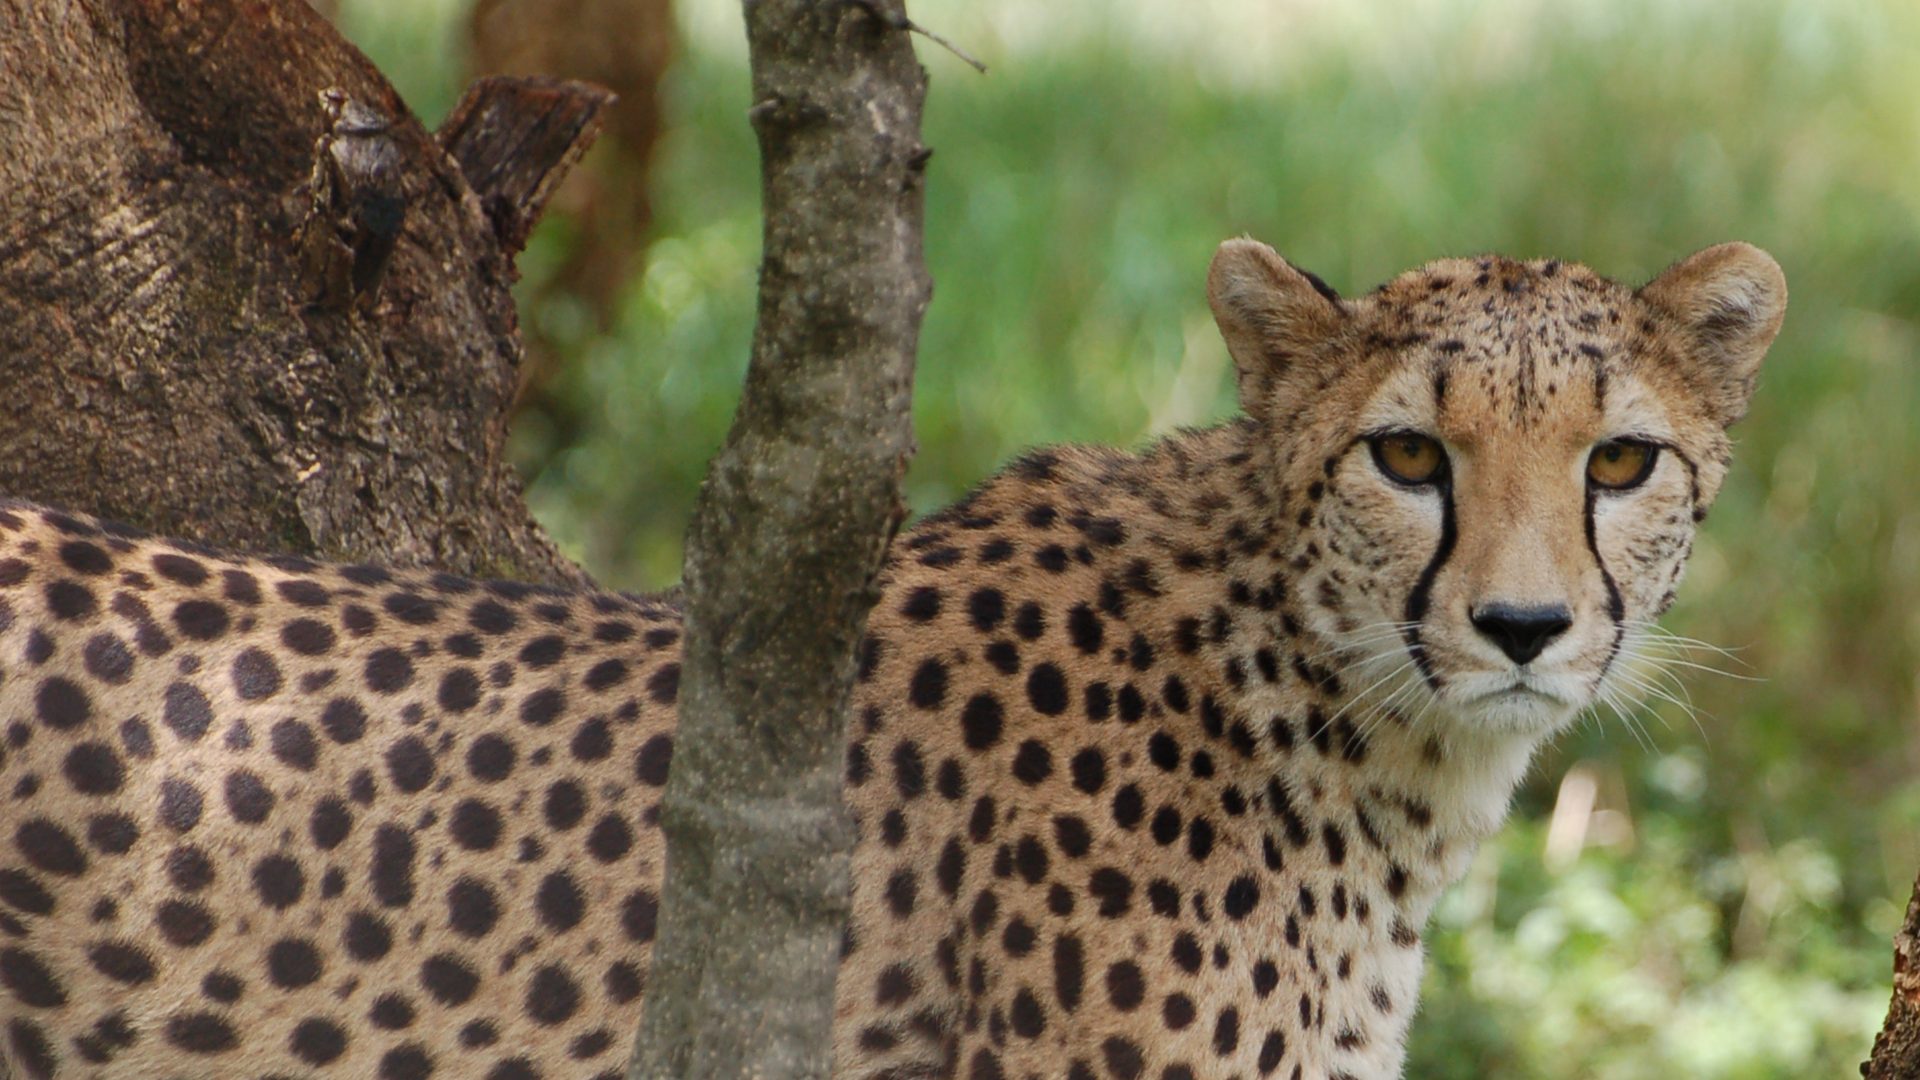 A photo of an adult cheetah peeking through the undergrowth